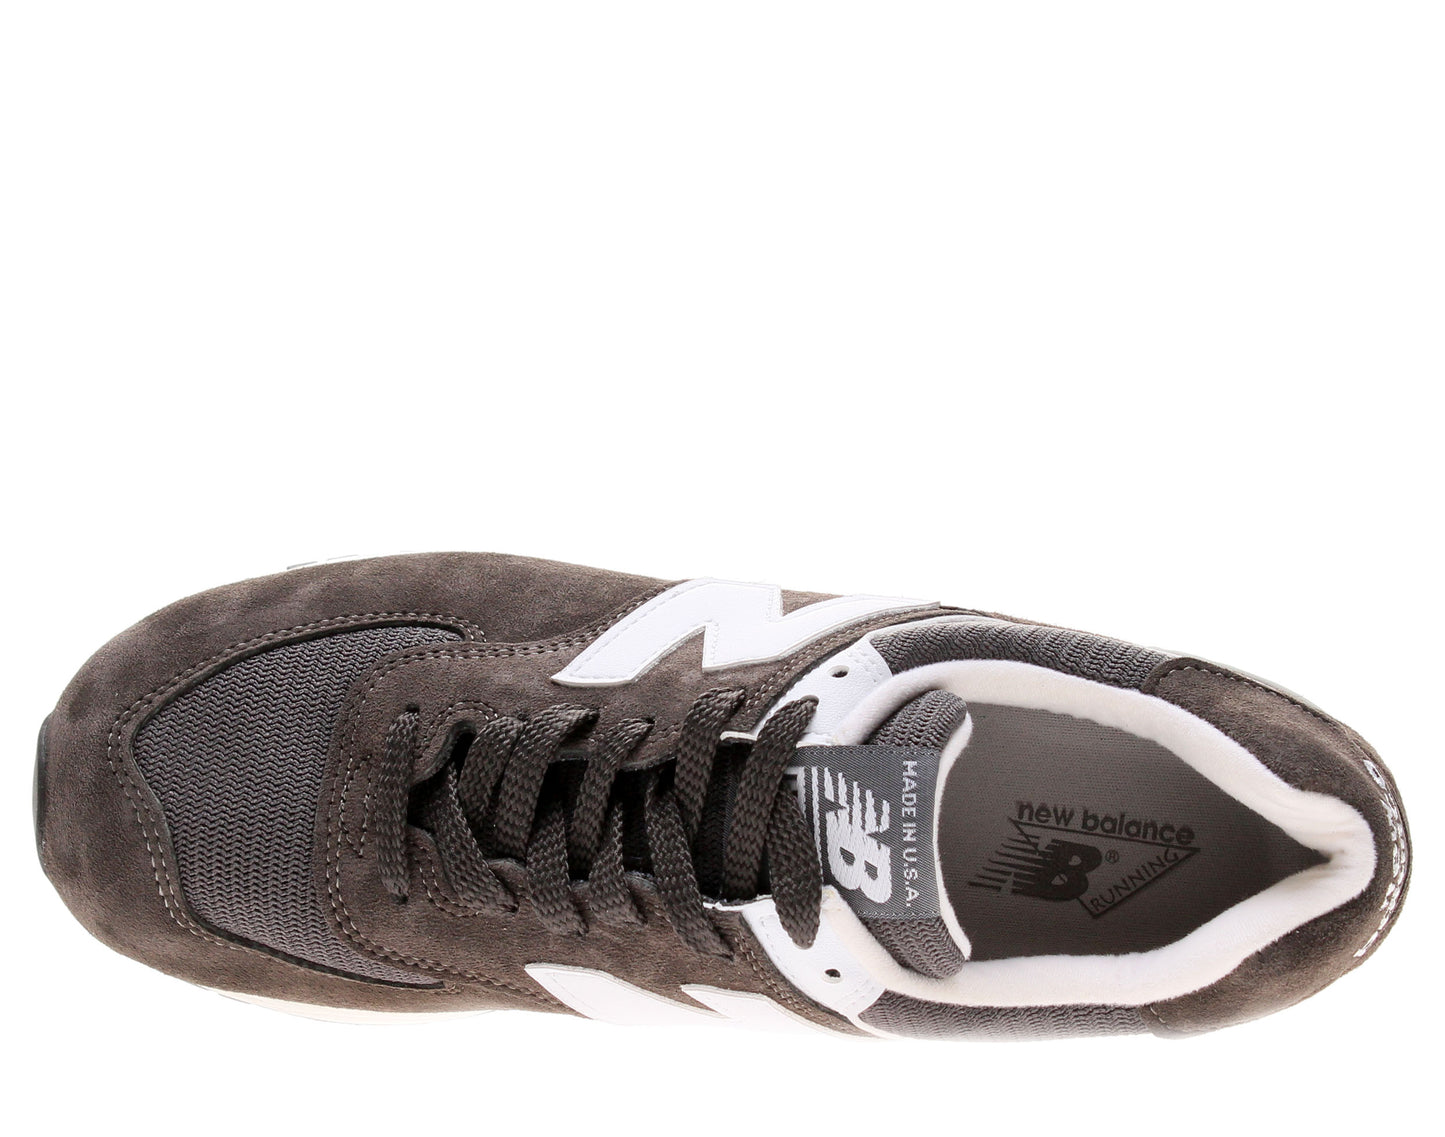 New Balance 576 Men's Running Shoes